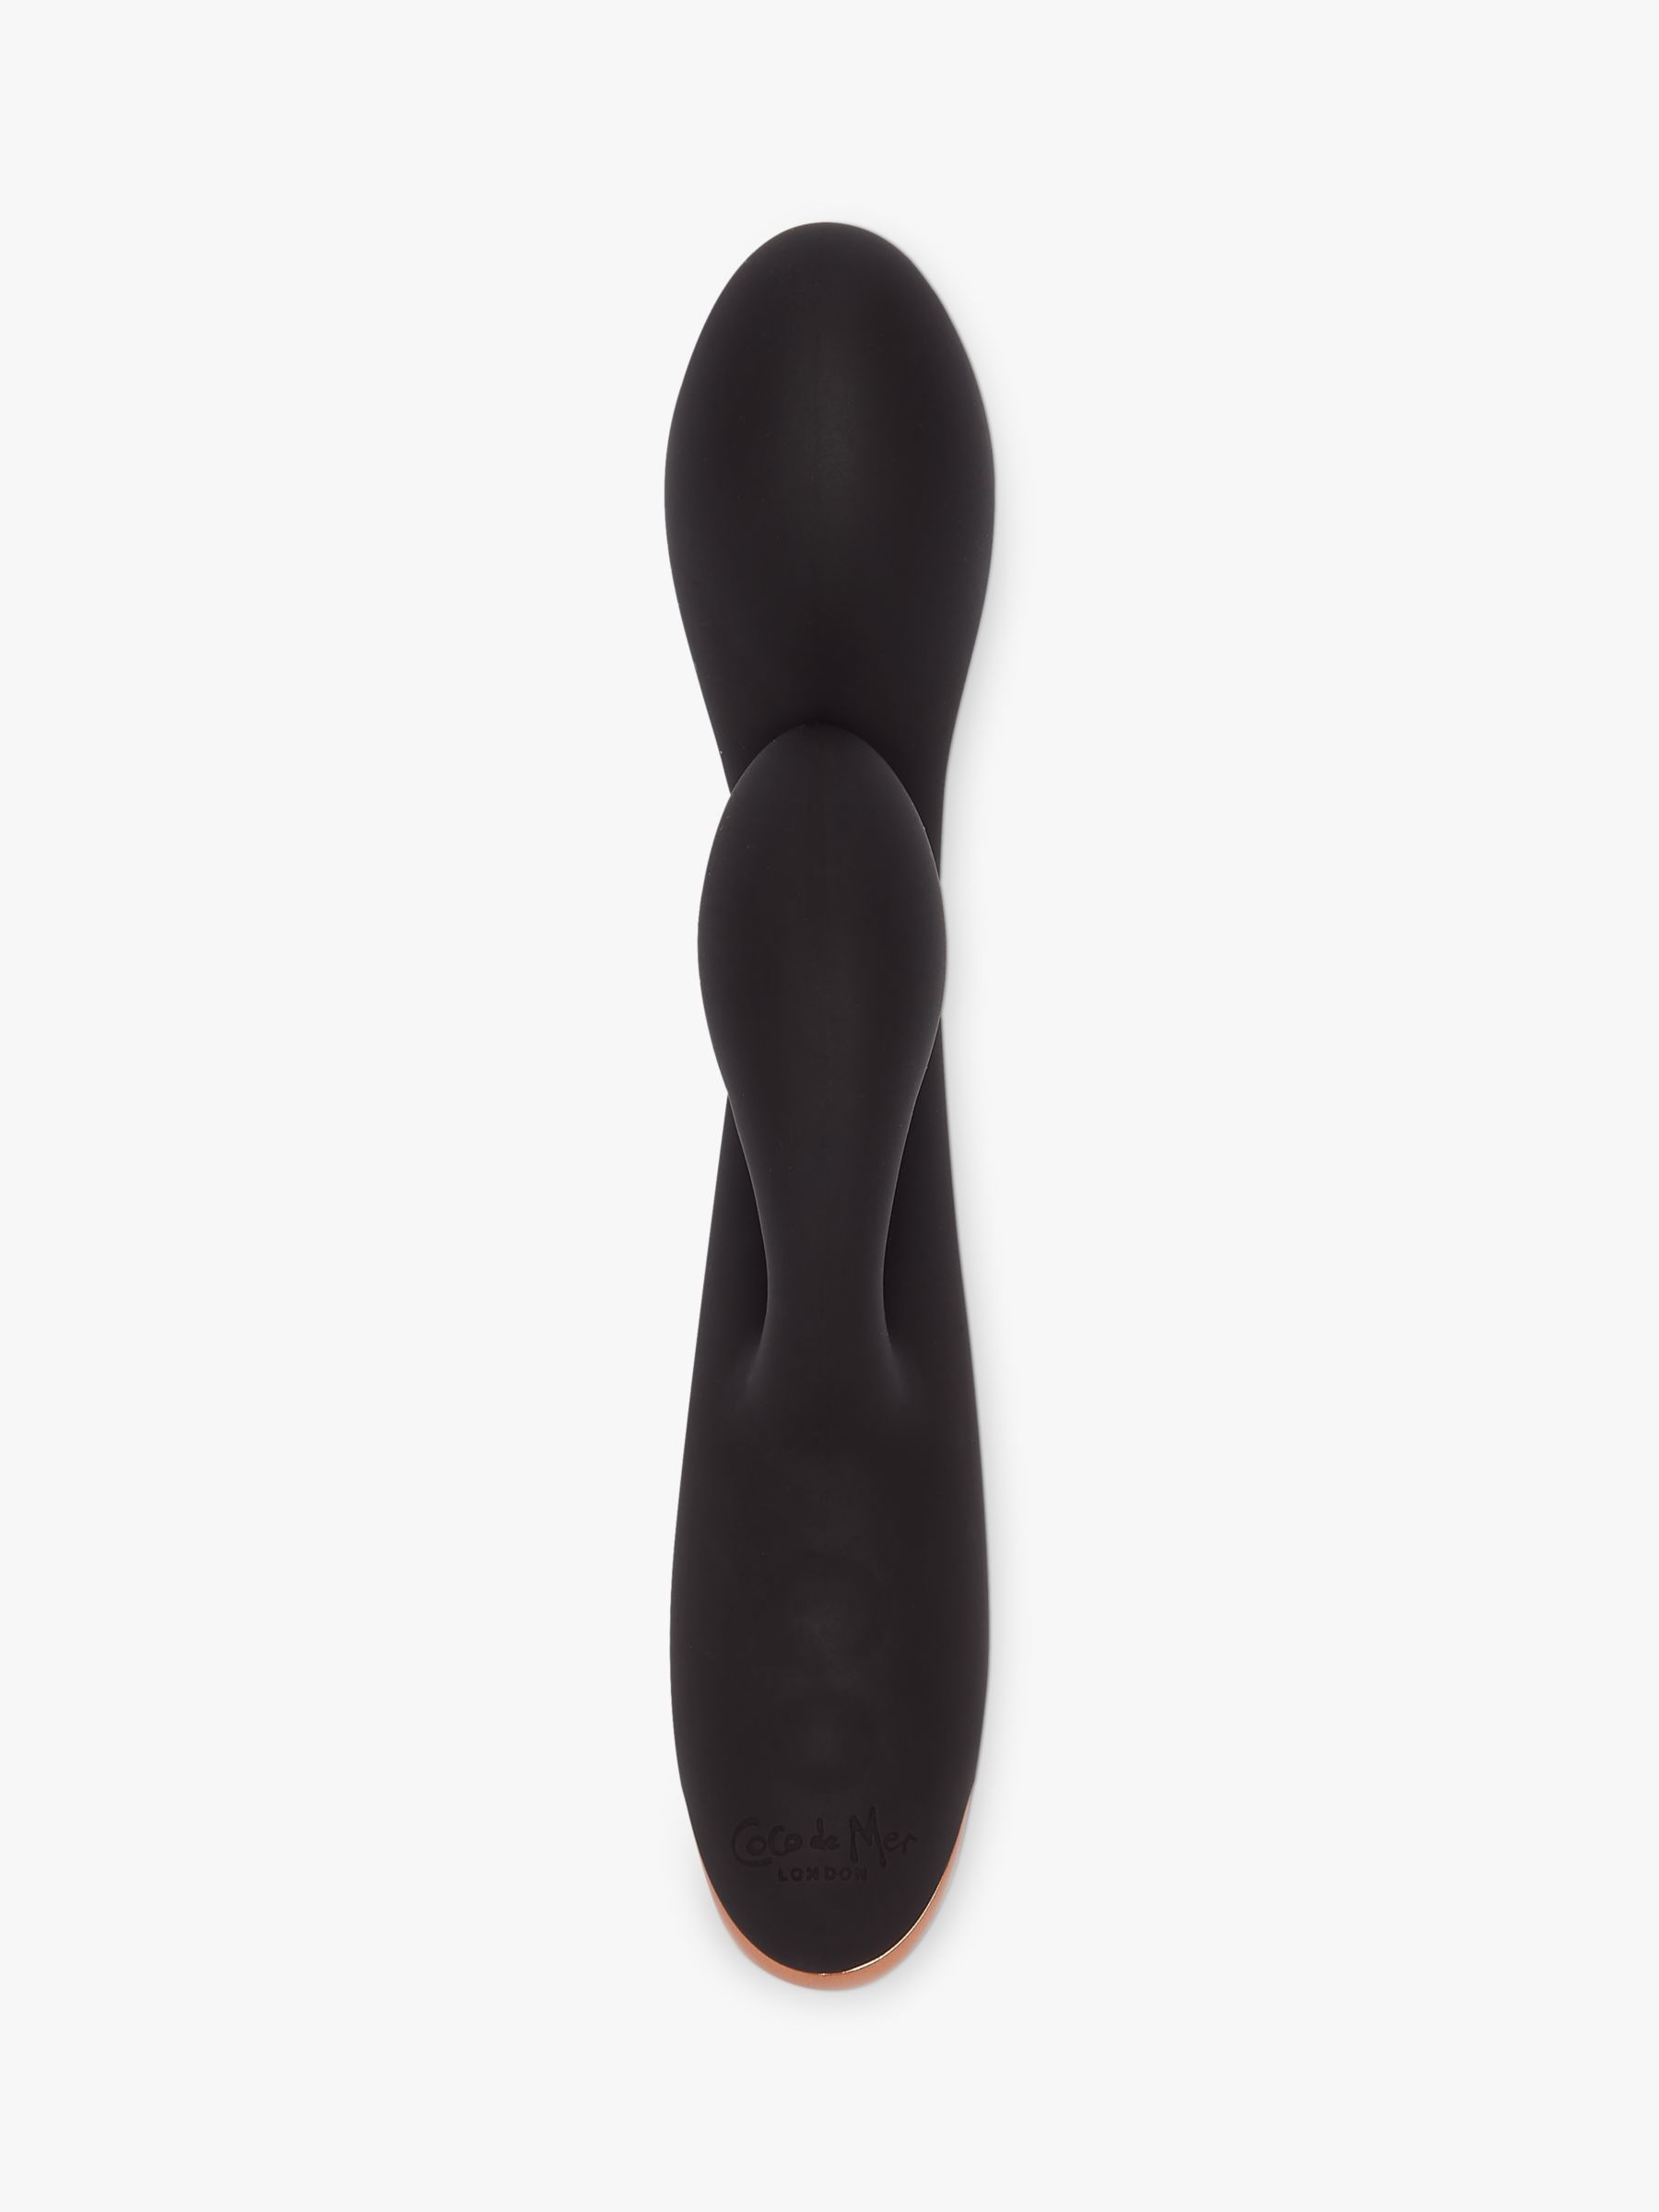 Kegel balls on panties on black background. Sex toy. Stock Photo